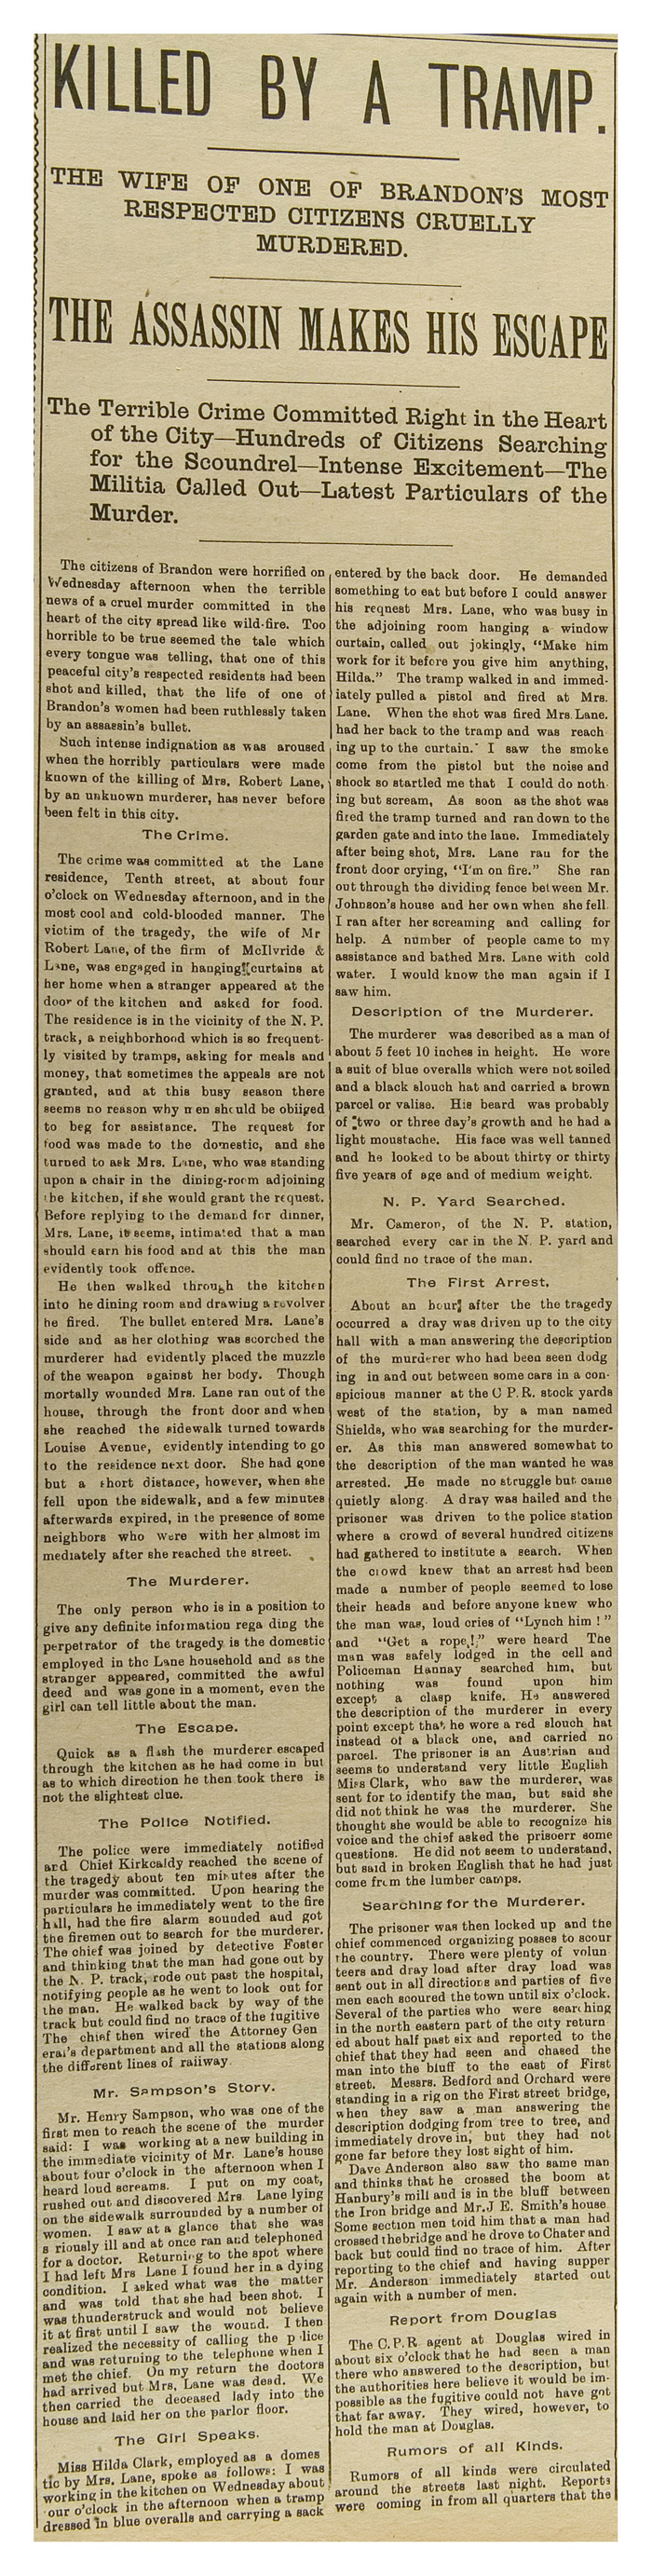 Brandon Times Article,  6 July, 1899